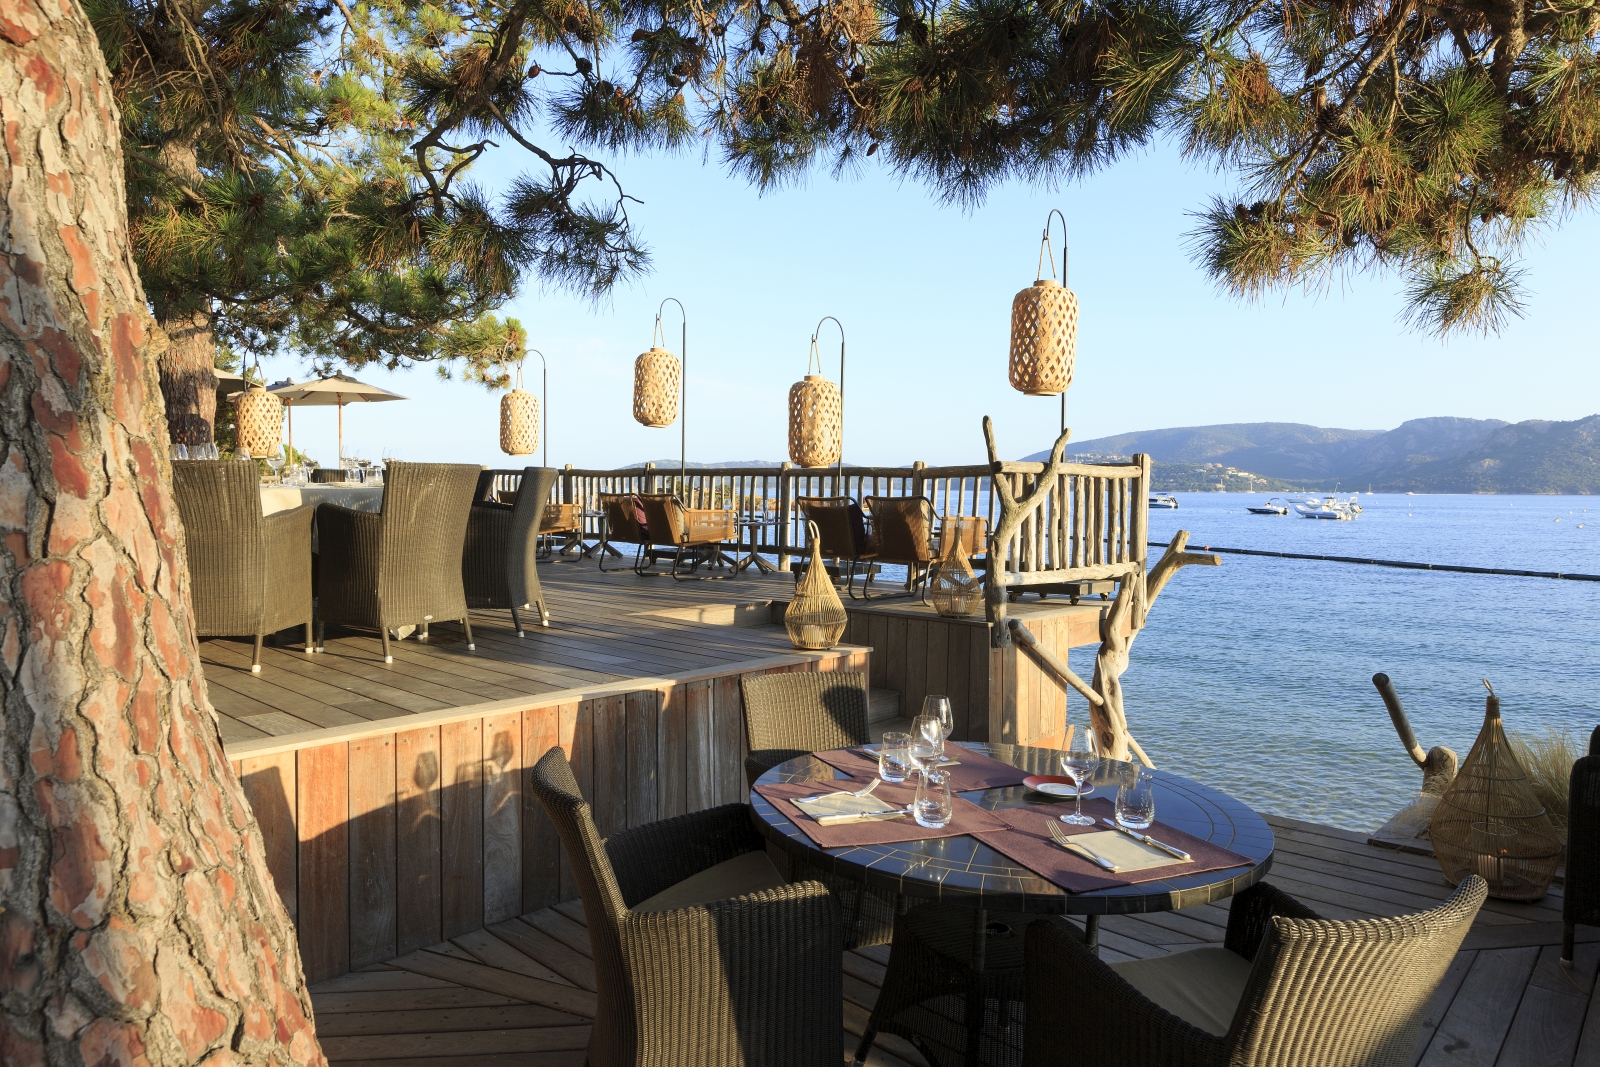 Restaurant at Grand Hotel de Cala Rossa in Corsica France